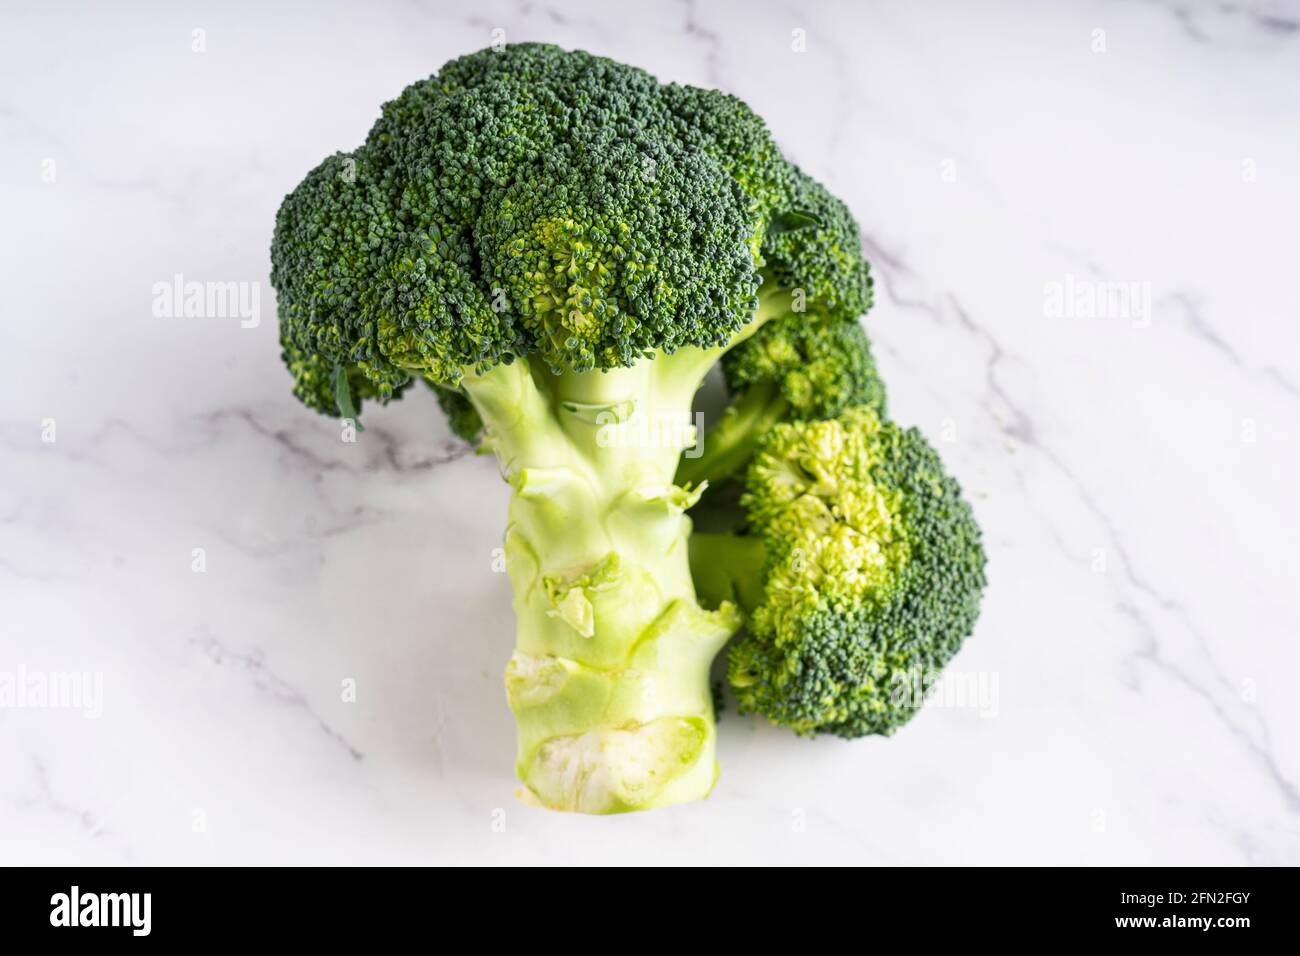 Broccoli isolated on white marble background Stock Photo